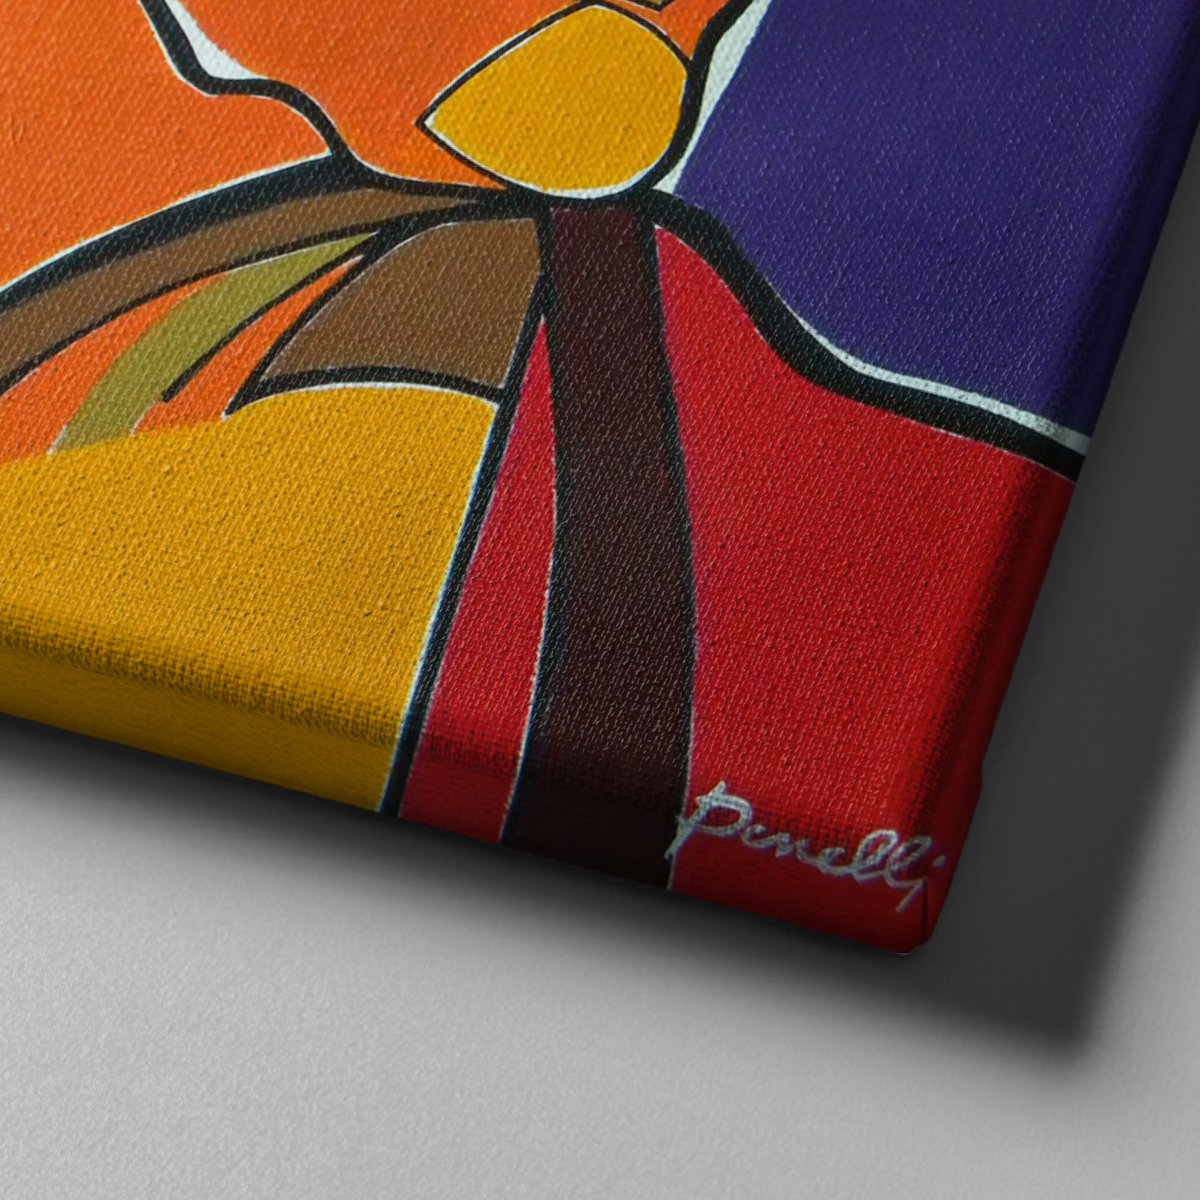 Canvas701 | Picasso Portre Kanvas Tablo - 